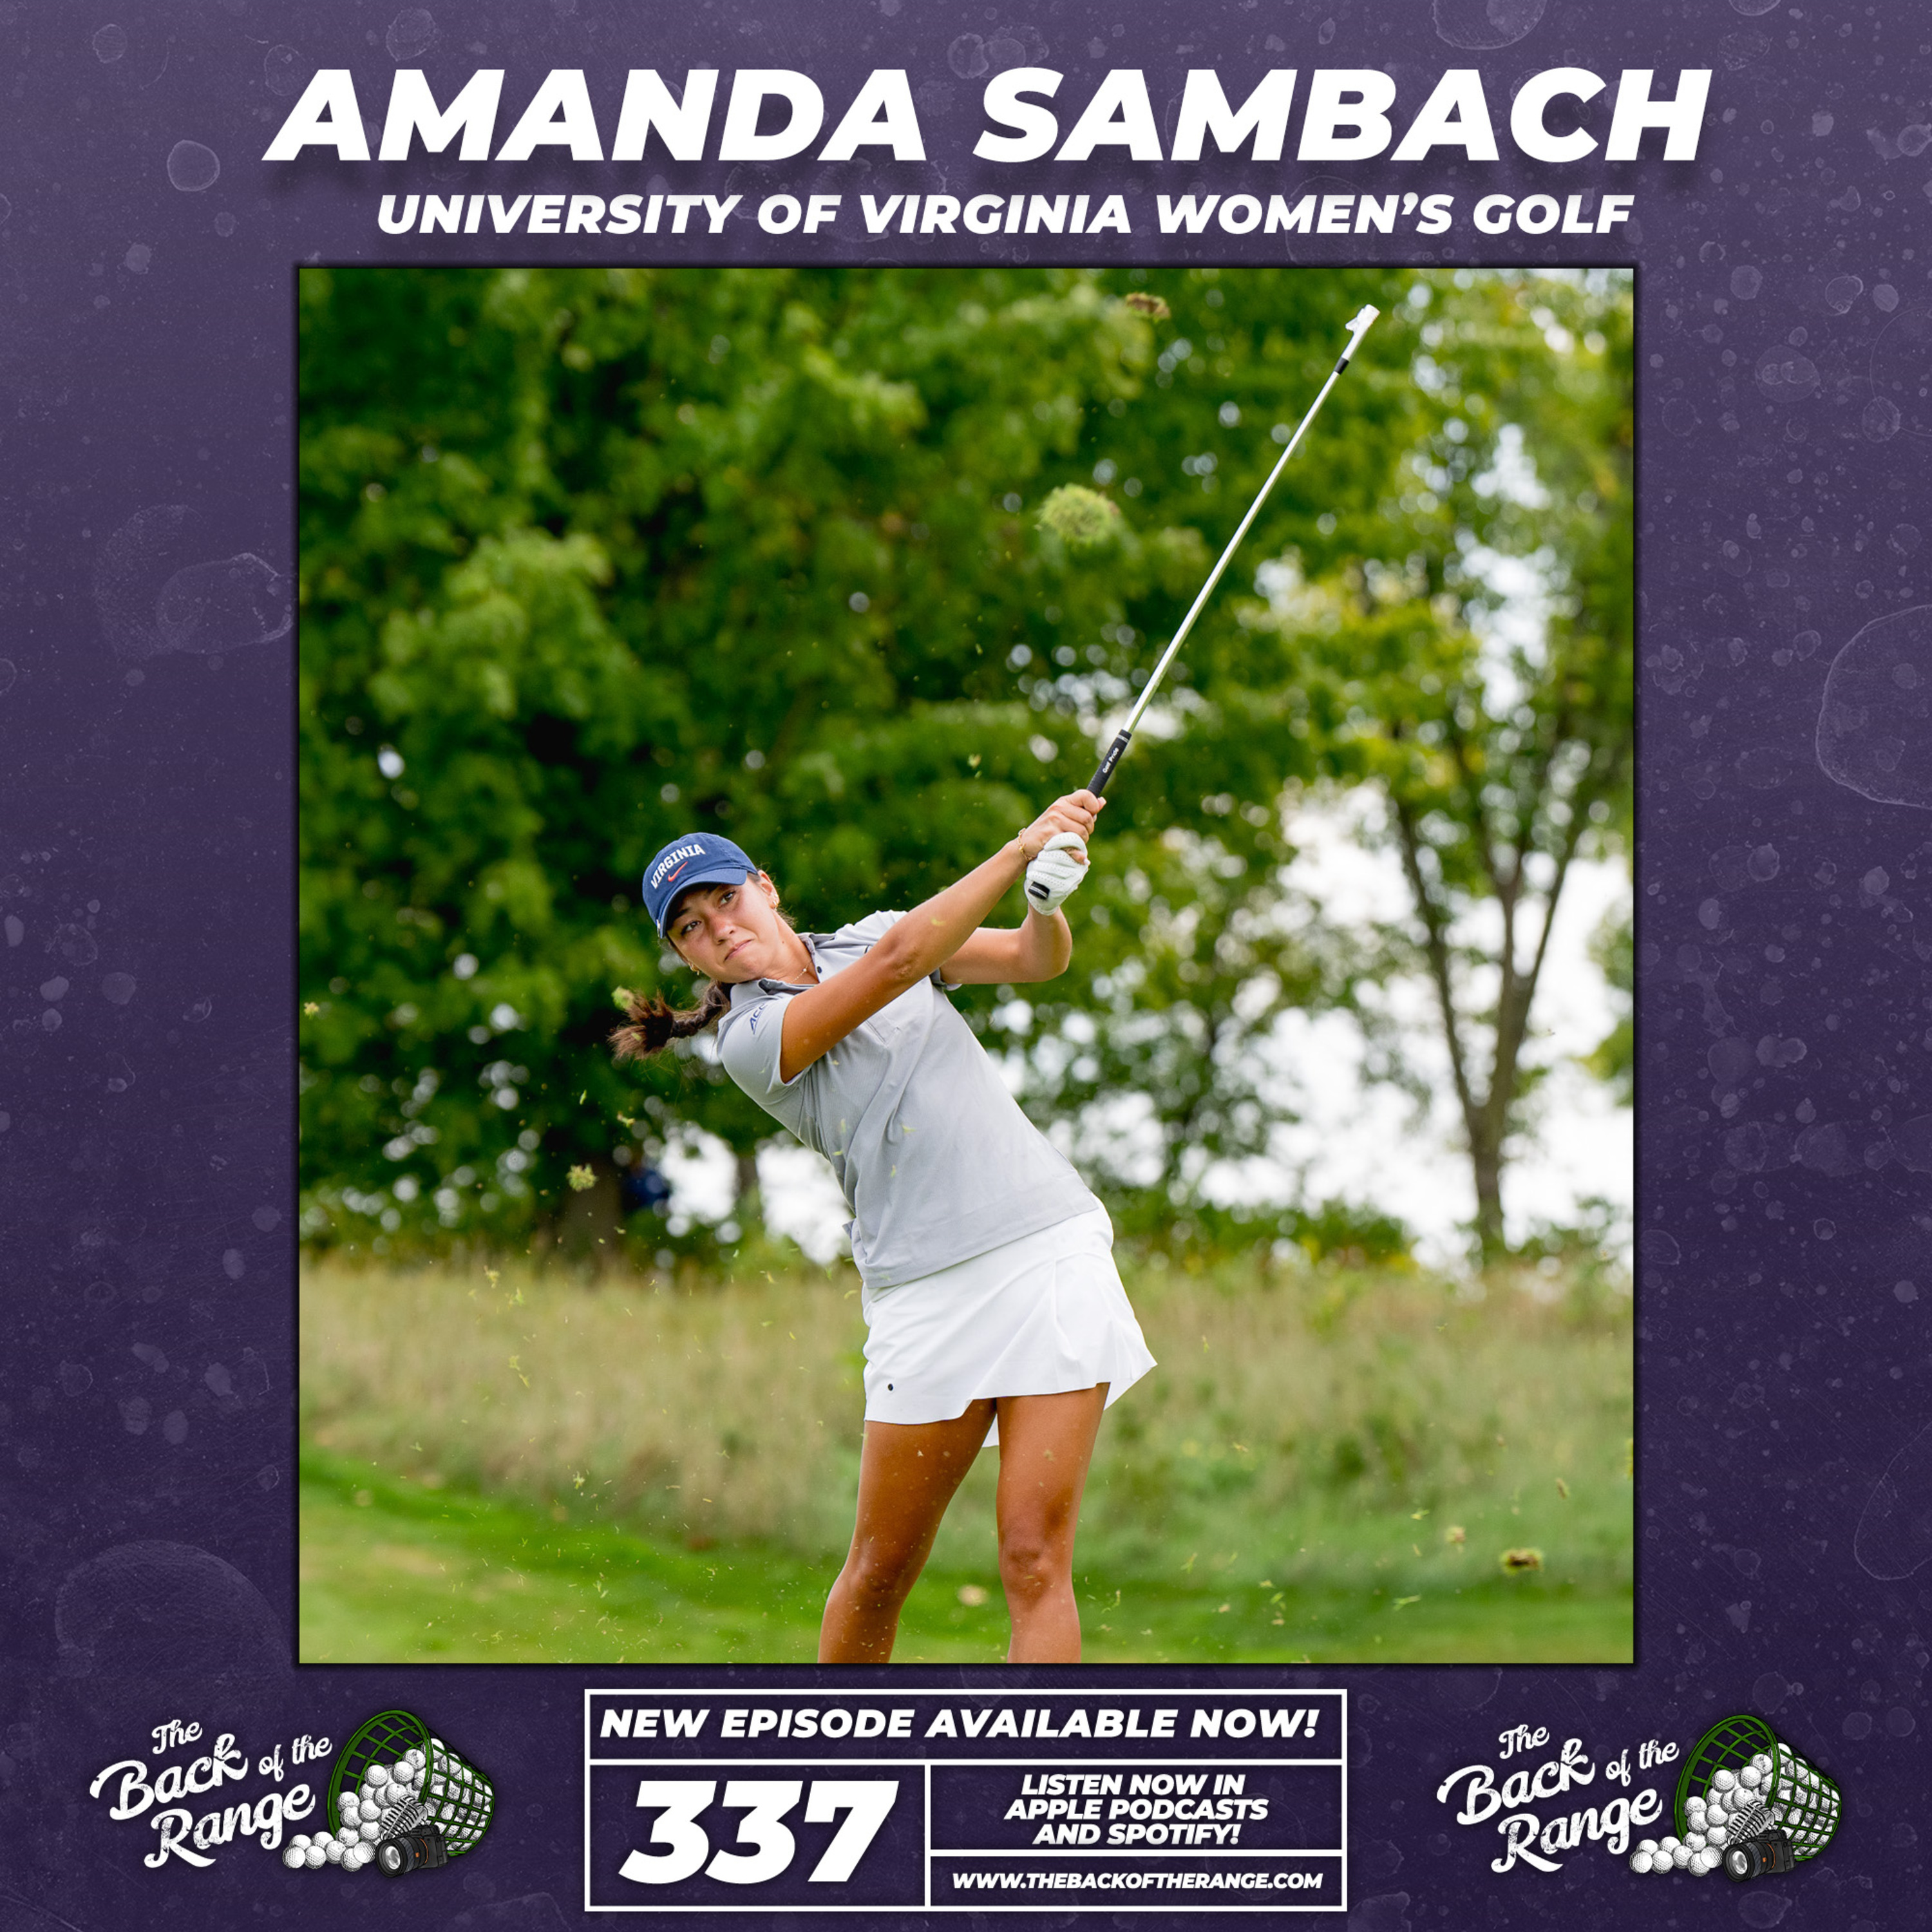 Amanda Sambach - University of Virginia Women's Golf